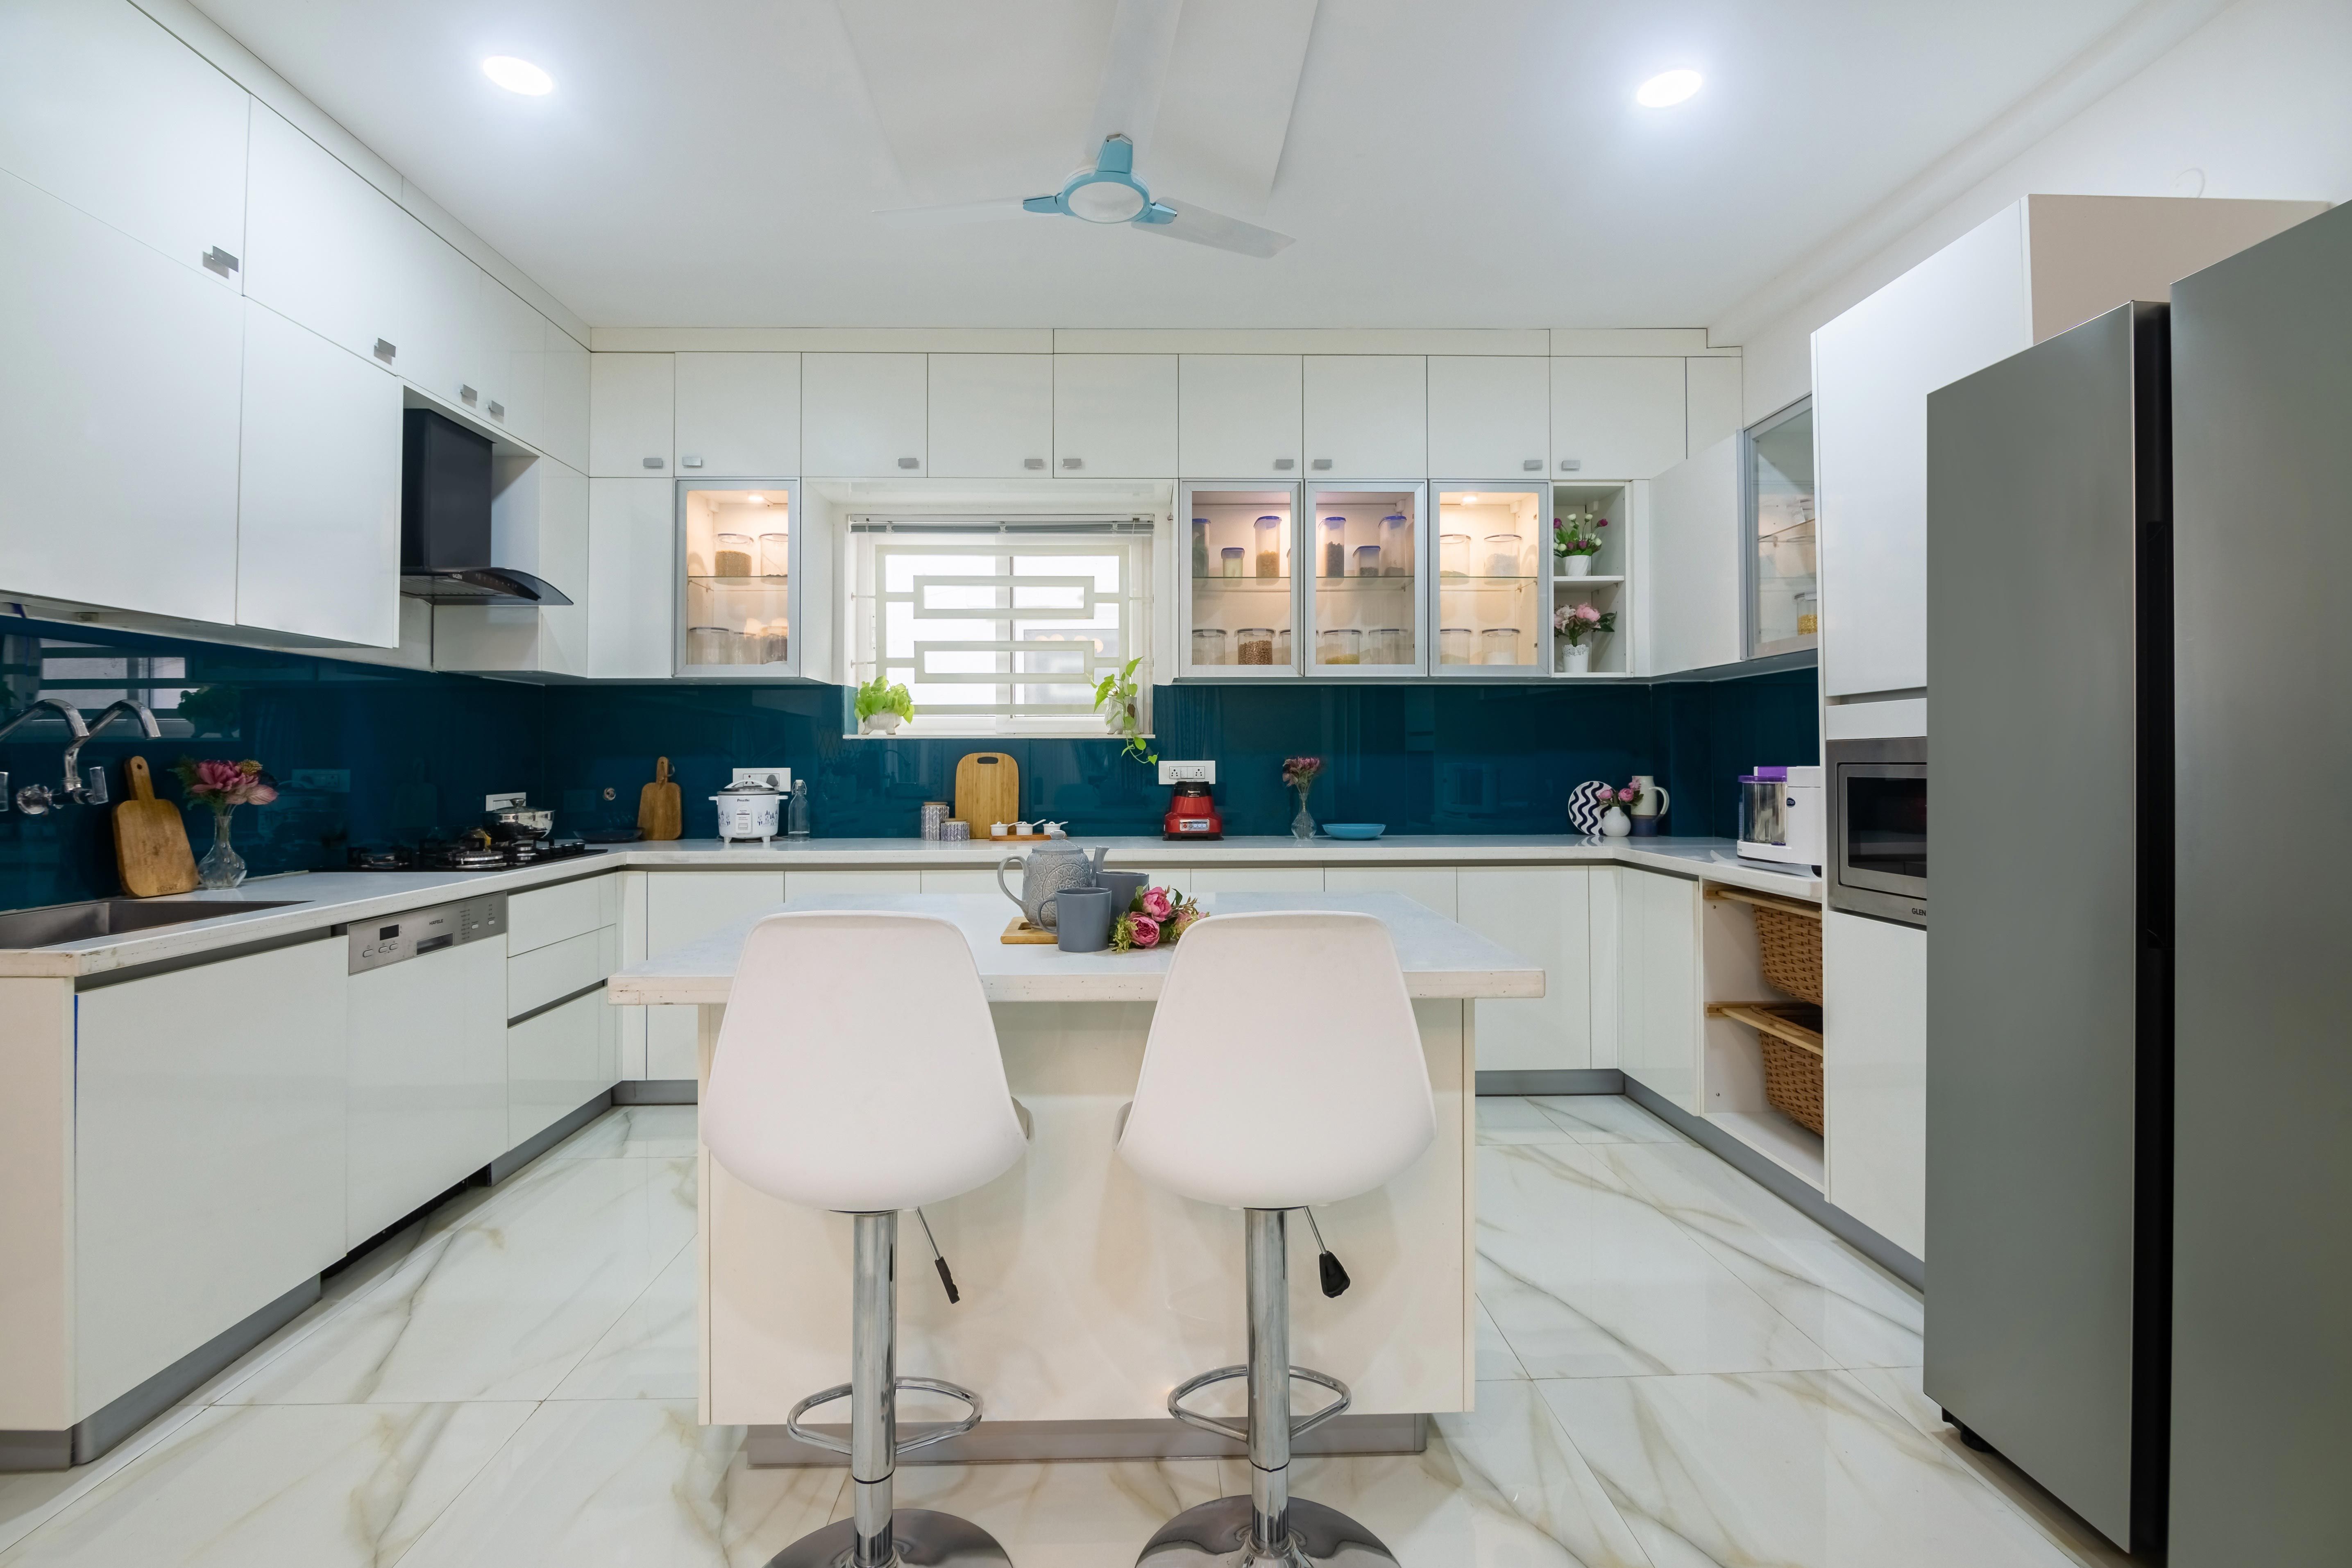 Modern Modular White Island Kitchen Design With A Quartz Countertop